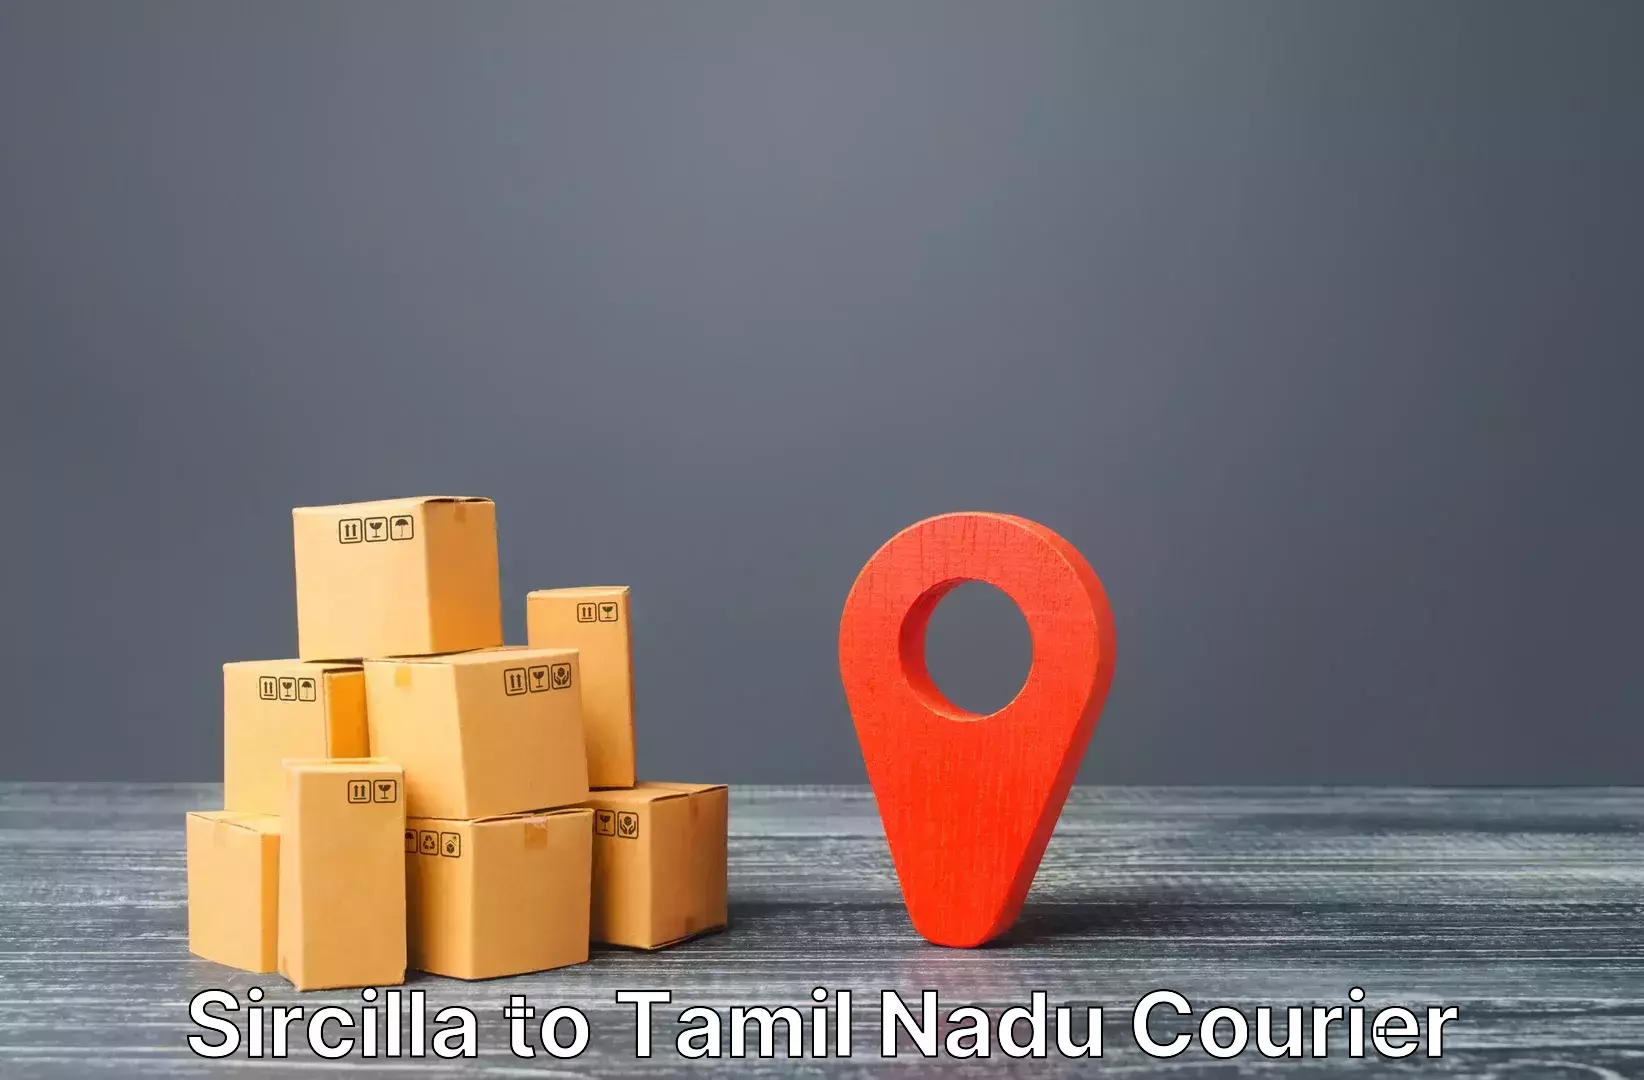 Baggage delivery optimization Sircilla to Tamil Nadu